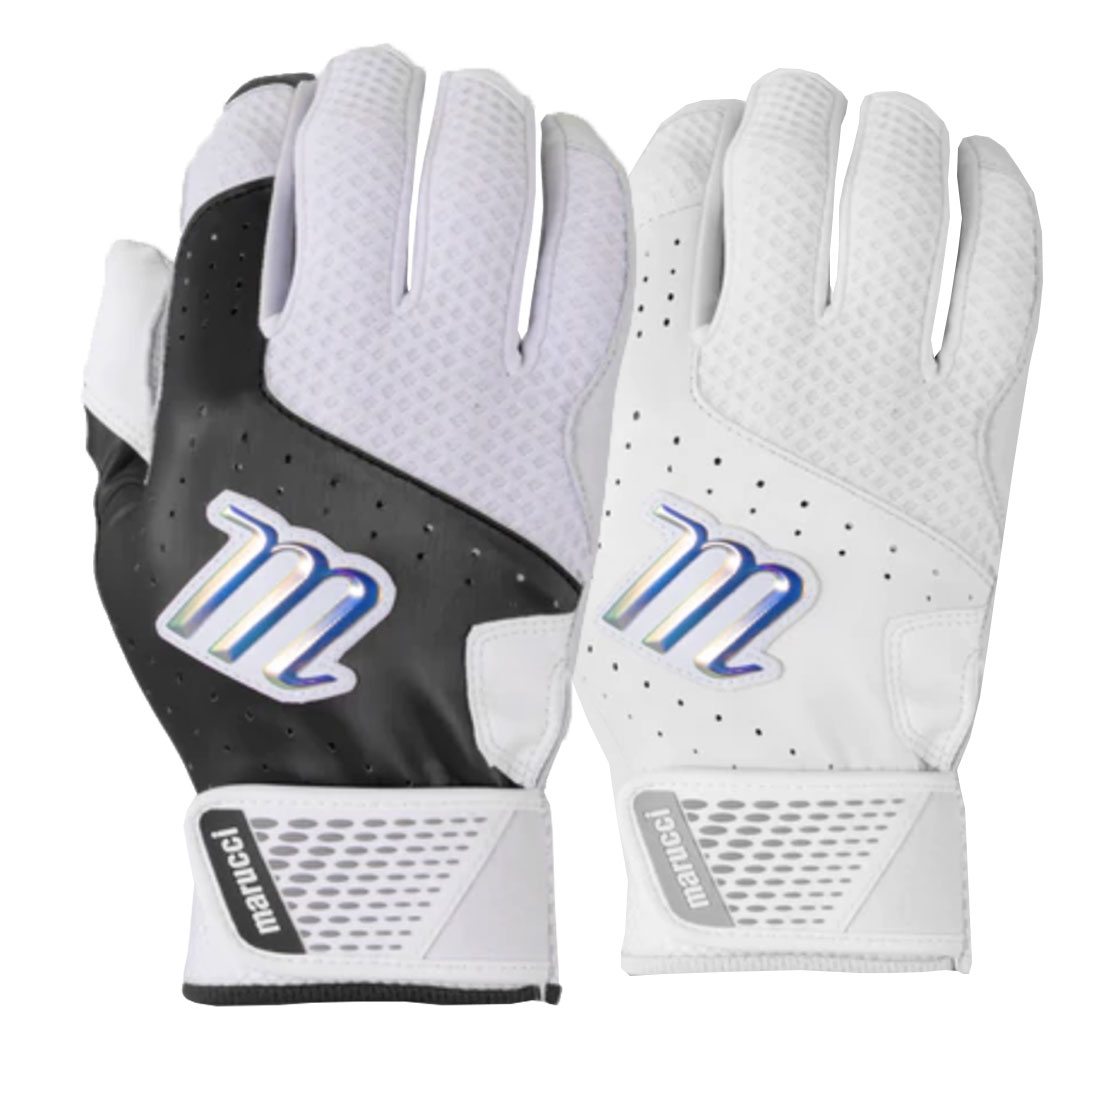 Sizes 1 Pair 2021 Marucci MBGCRST Crest Batting Gloves Adult Various Colors